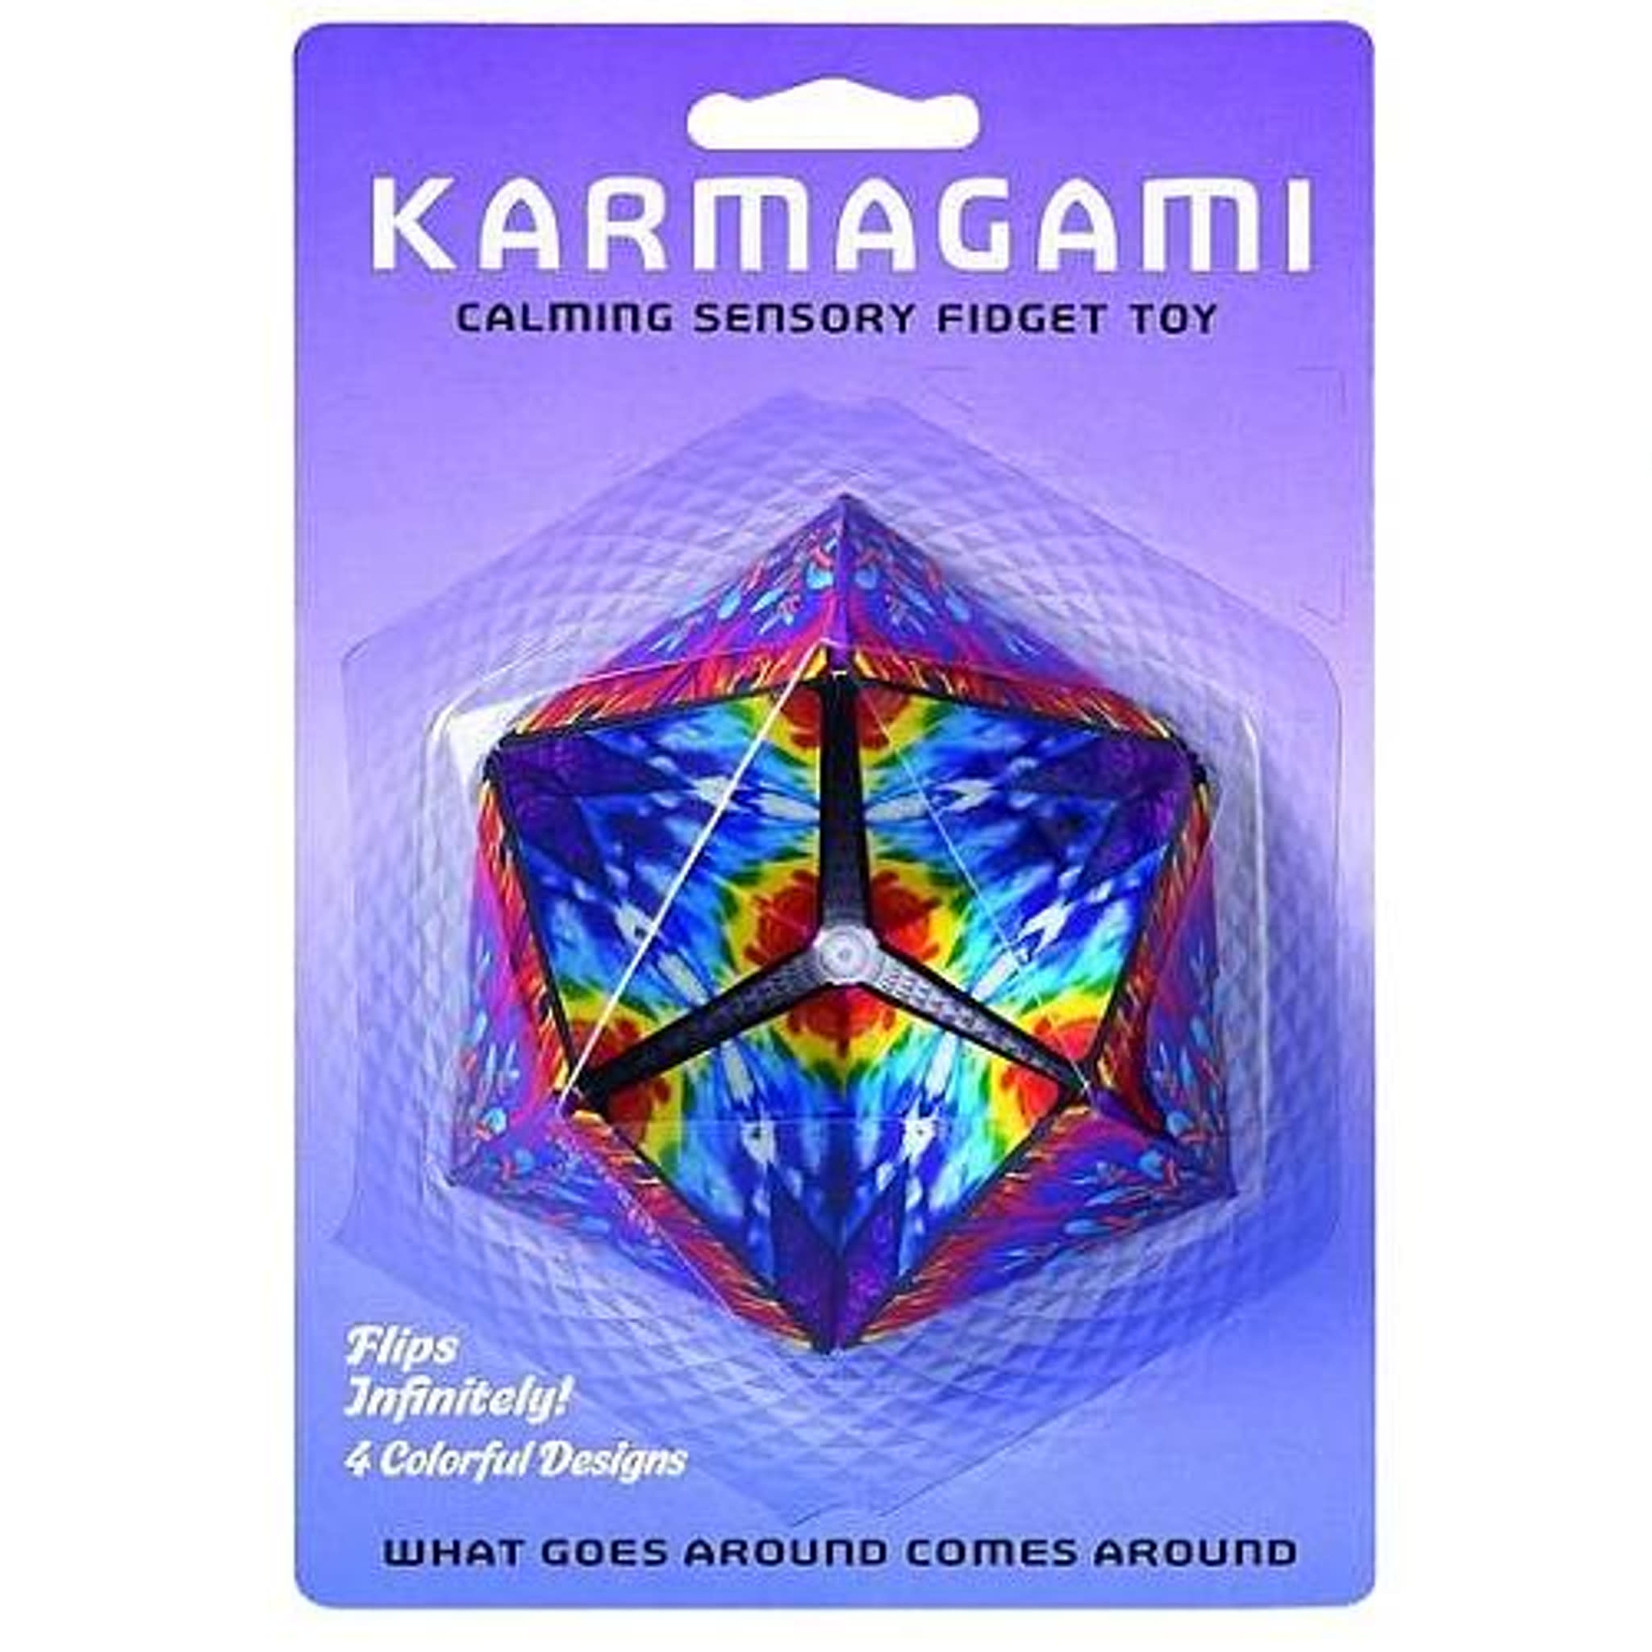 Karmagami Fidget Toy